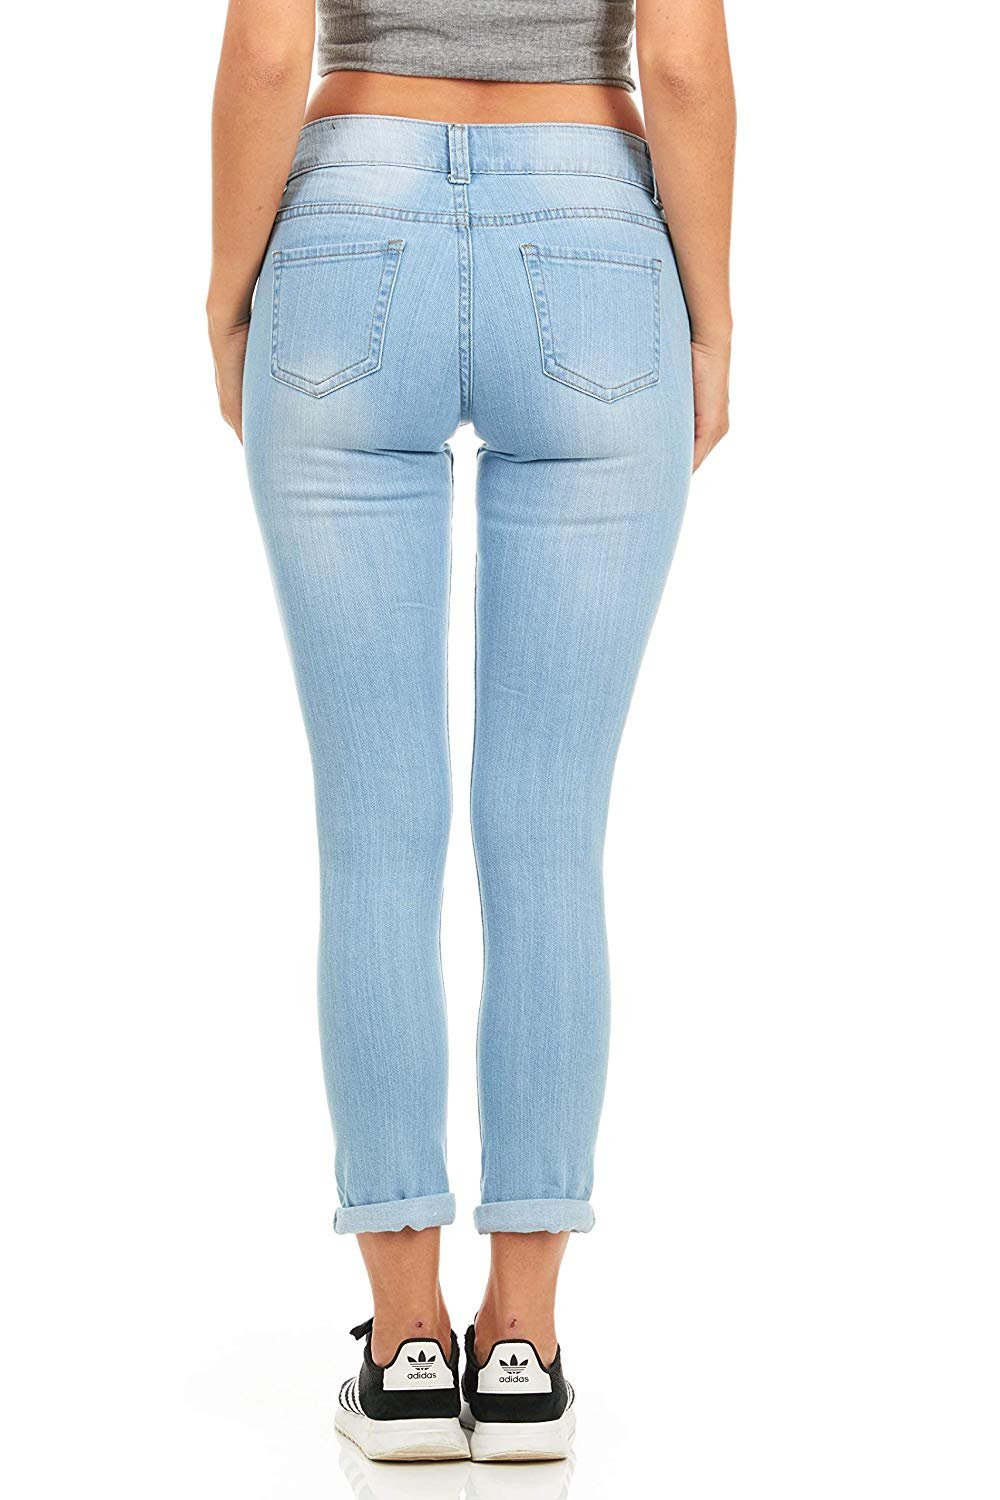 Cover Girl Denim Overall Jeans for Women Bib Strap Skinny Fit Junior Size 1 Varsity Blue Wash - image 2 of 10